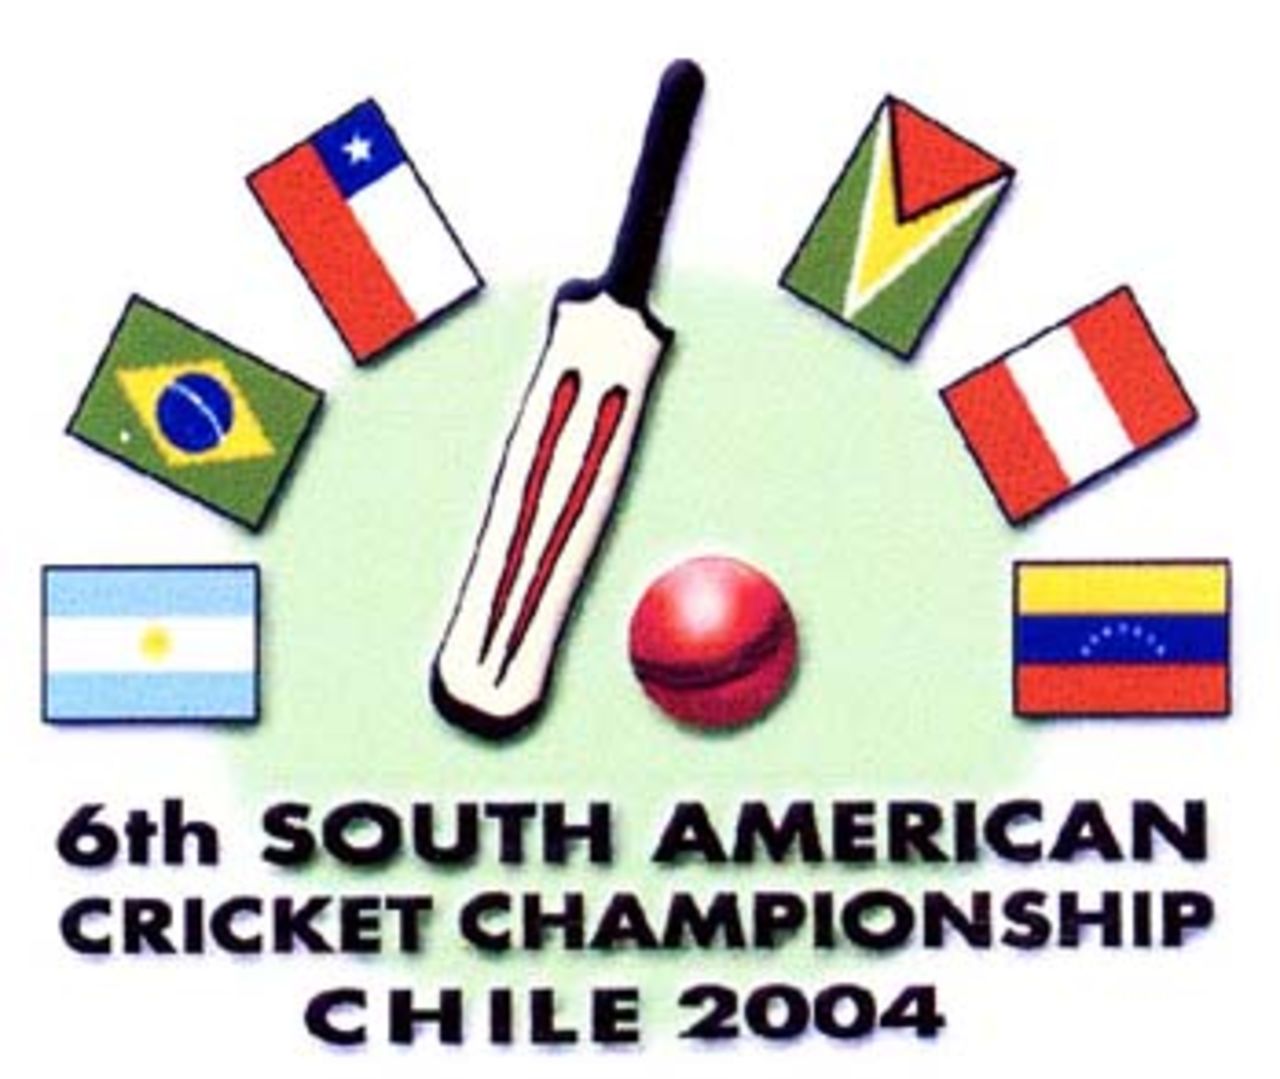 Sixth South American Championship